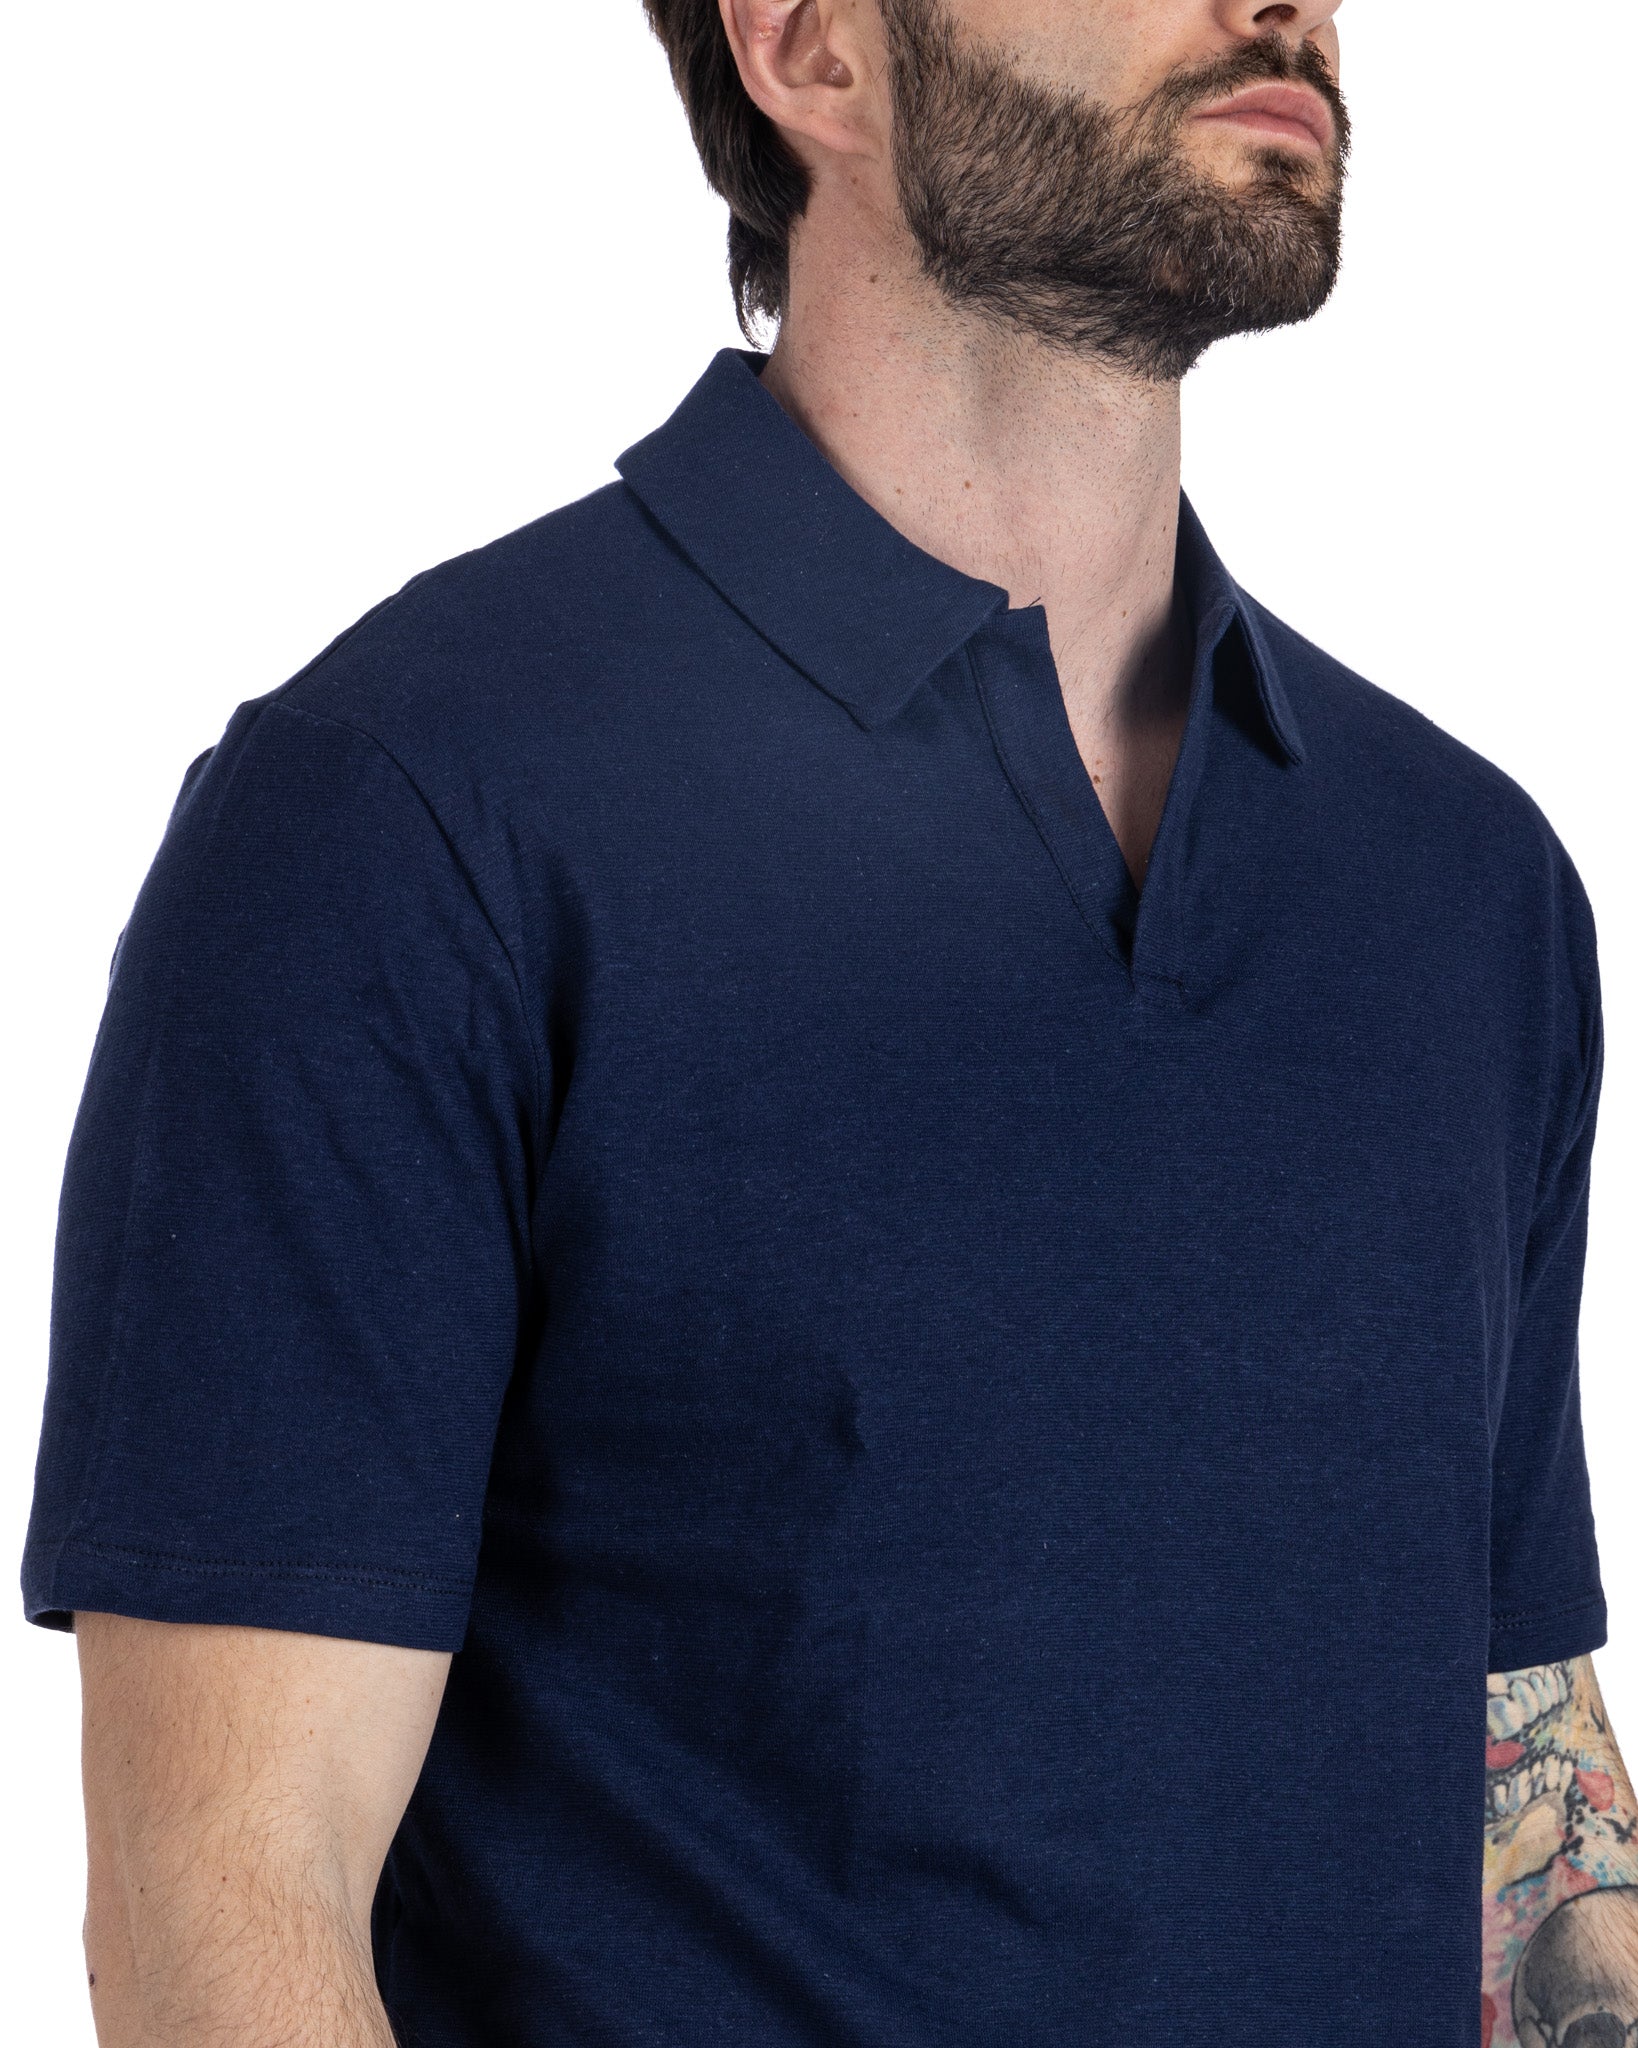 Panarea - blue linen polo shirt